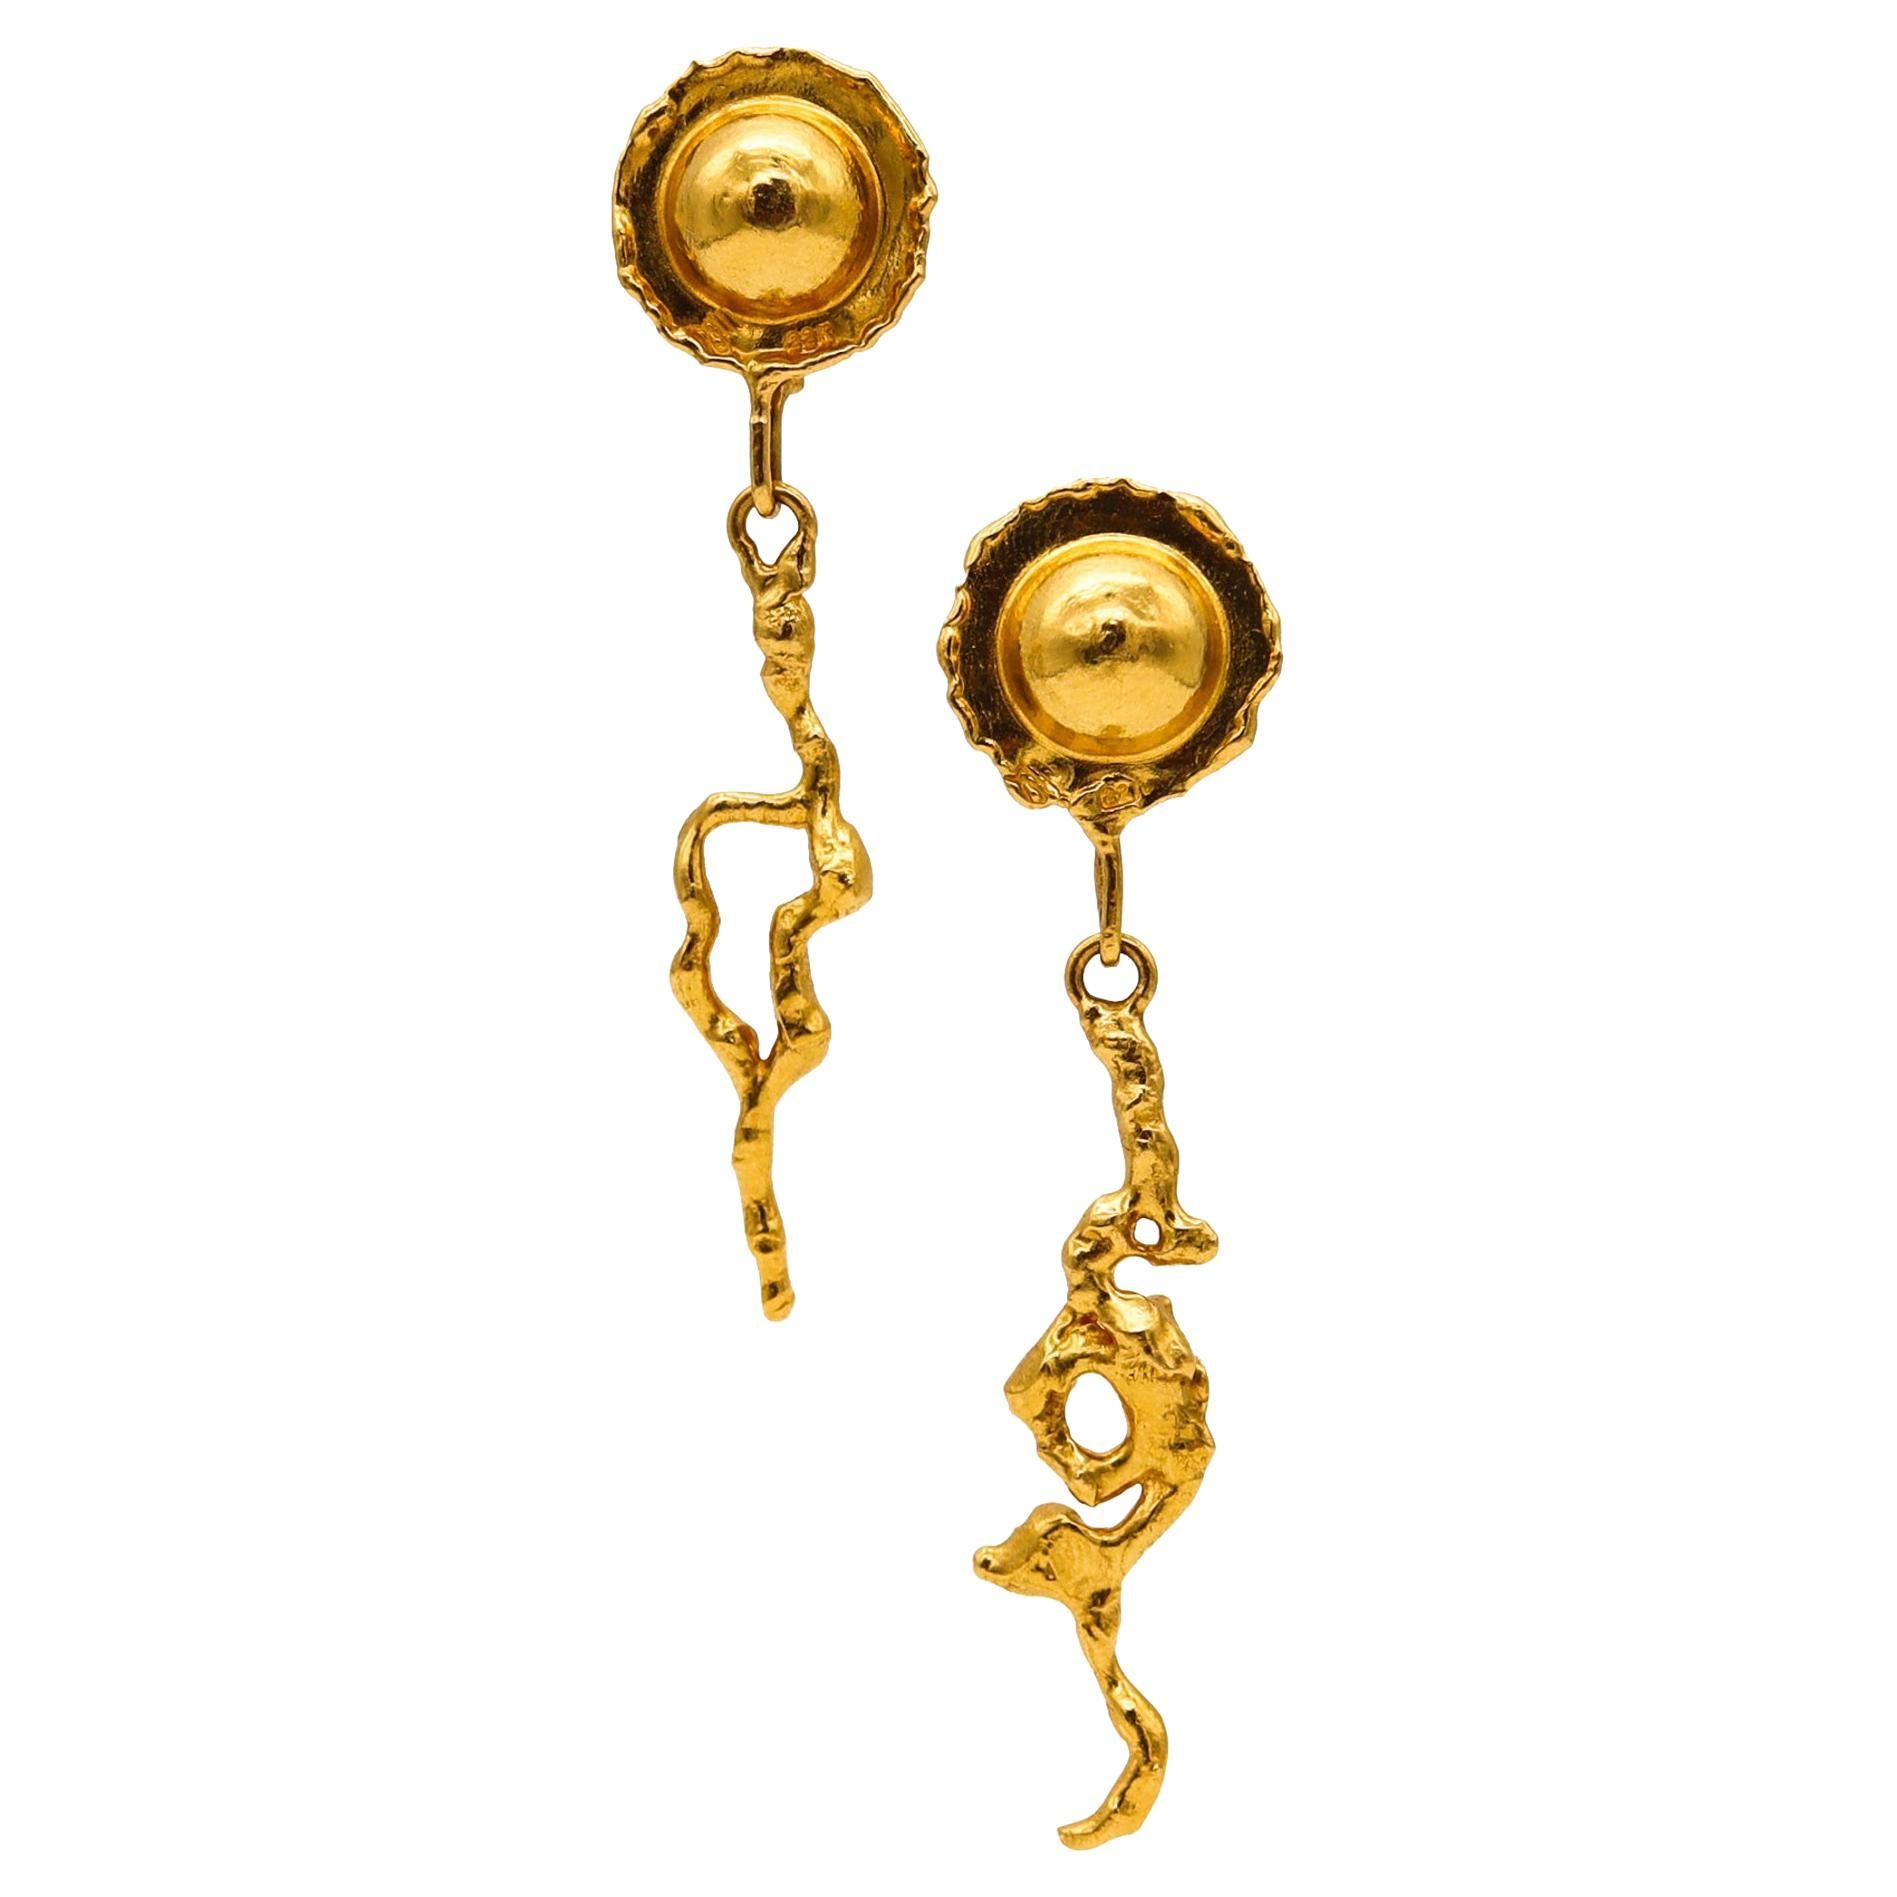 Jean Mahie Paris Artistic Convertible Dangle Earrings Textured 22k Yellow Gold